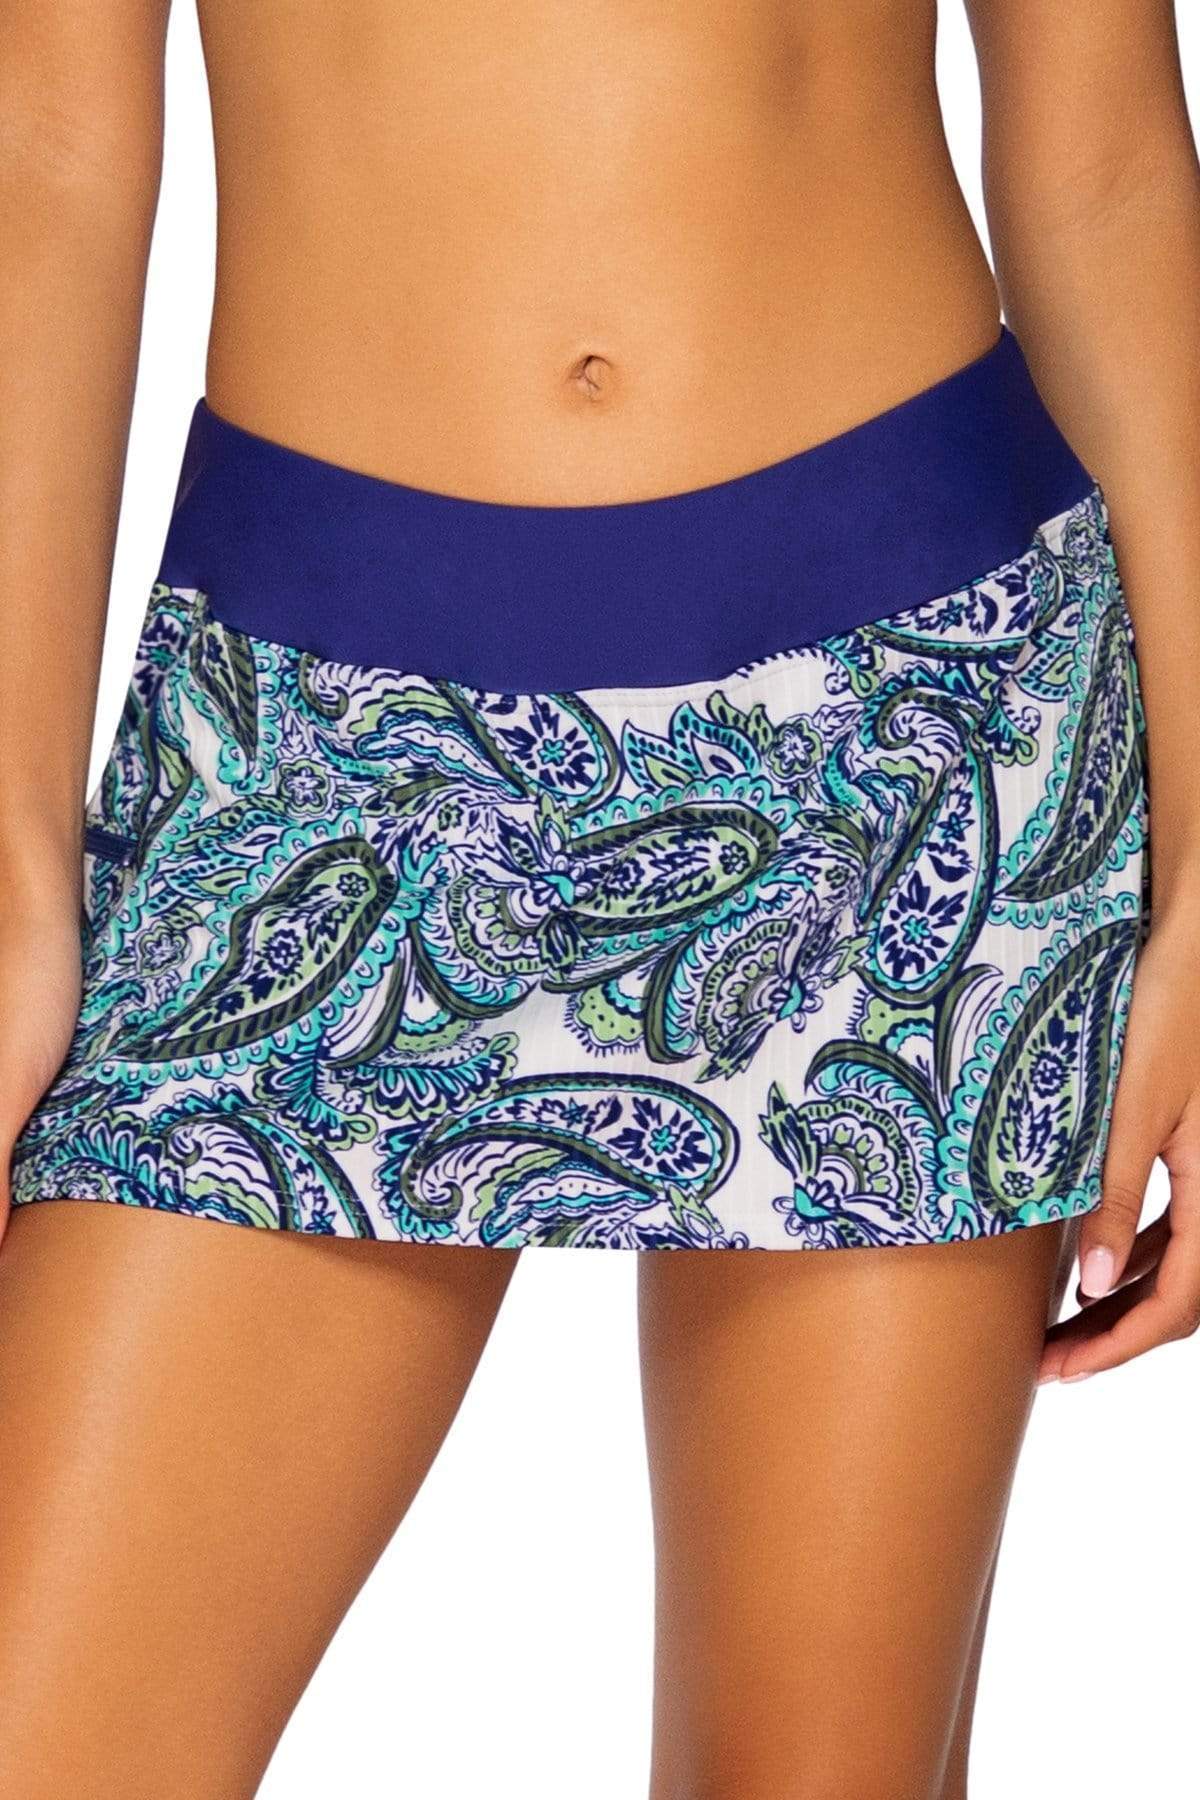 Bestswimwear -  Sunsets Cape Cod Sporty Swim Skirt